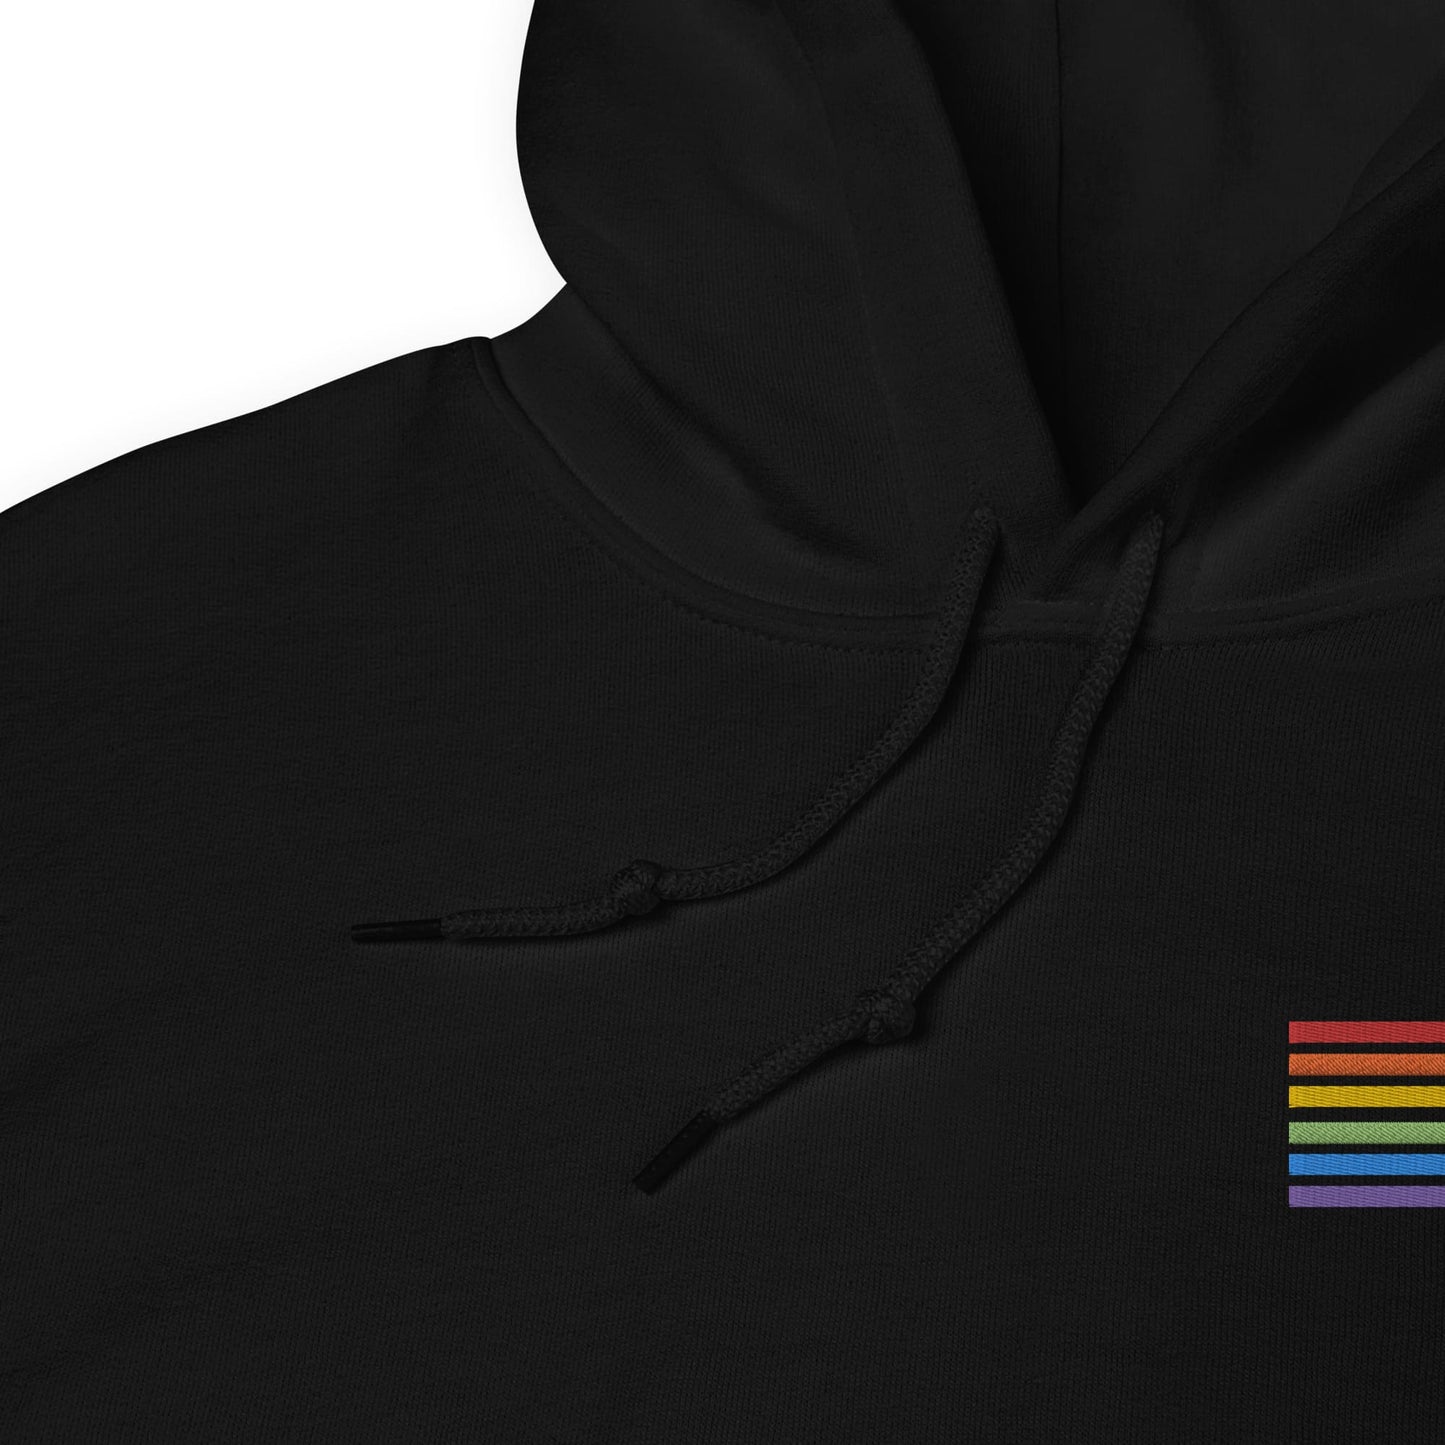 LGBT hoodie, subtle LGBTQ pride flag embroidered pocket design hooded sweatshirt, strings